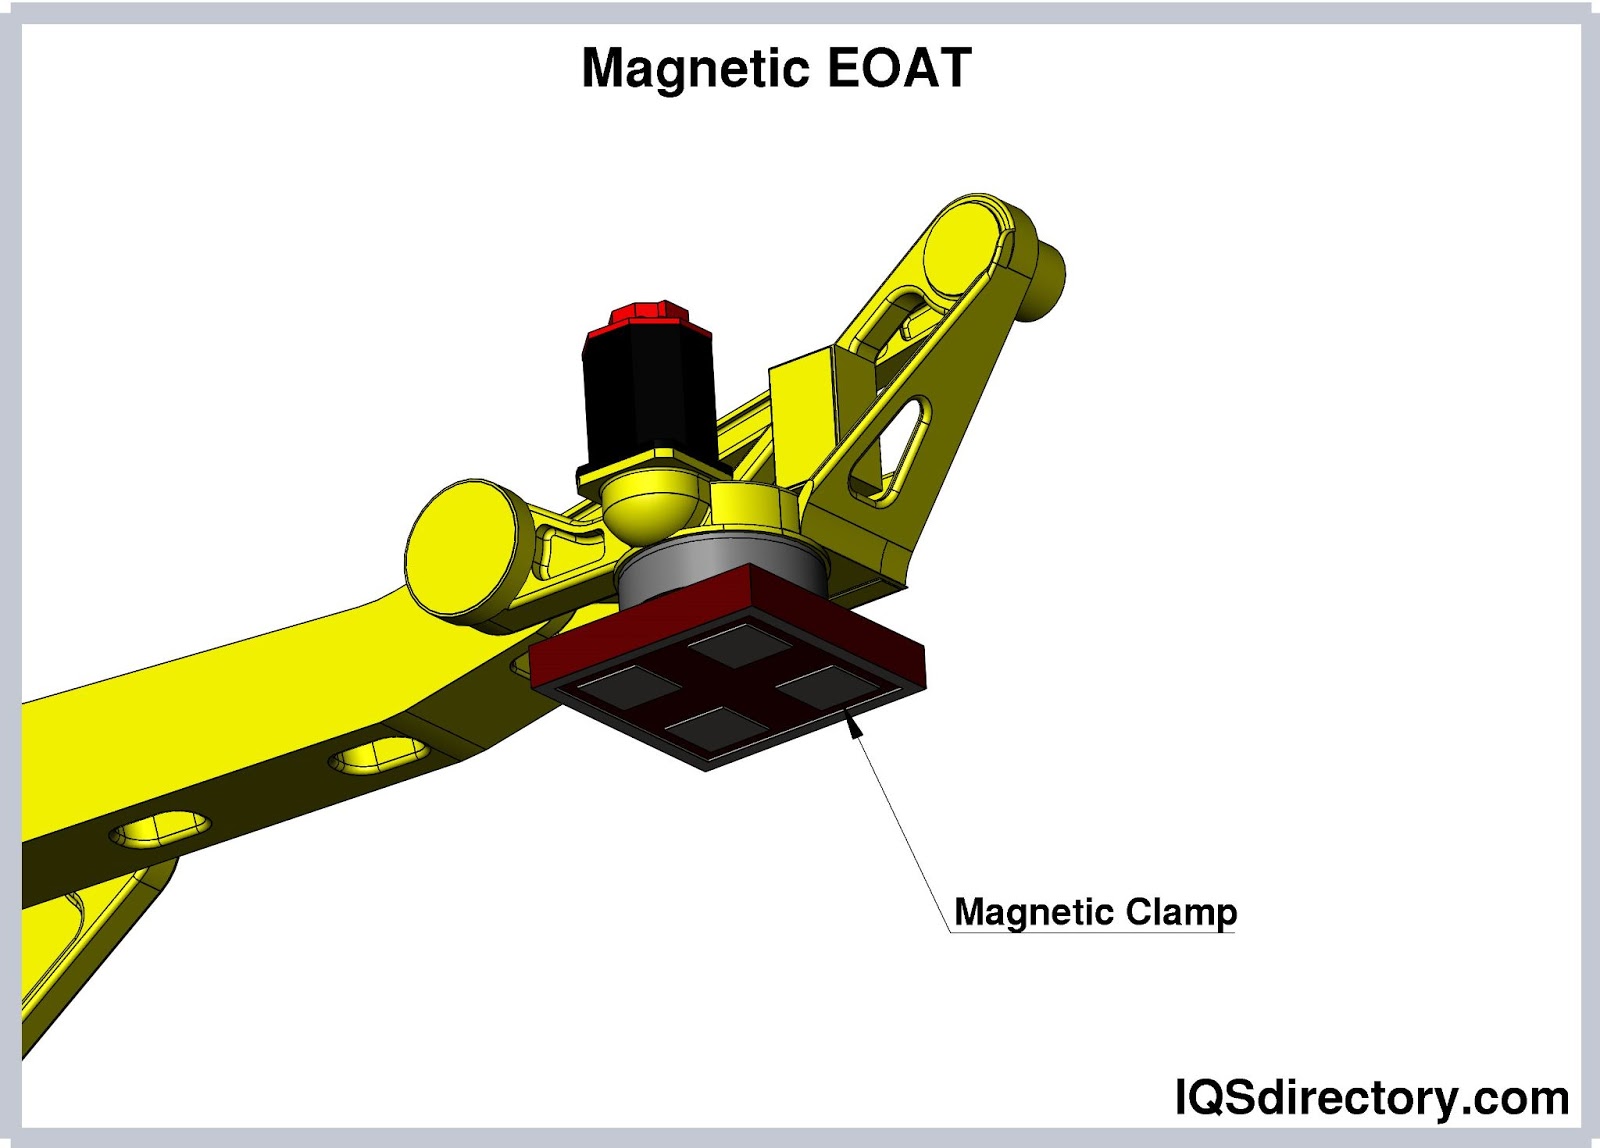 Magnetic EOAT